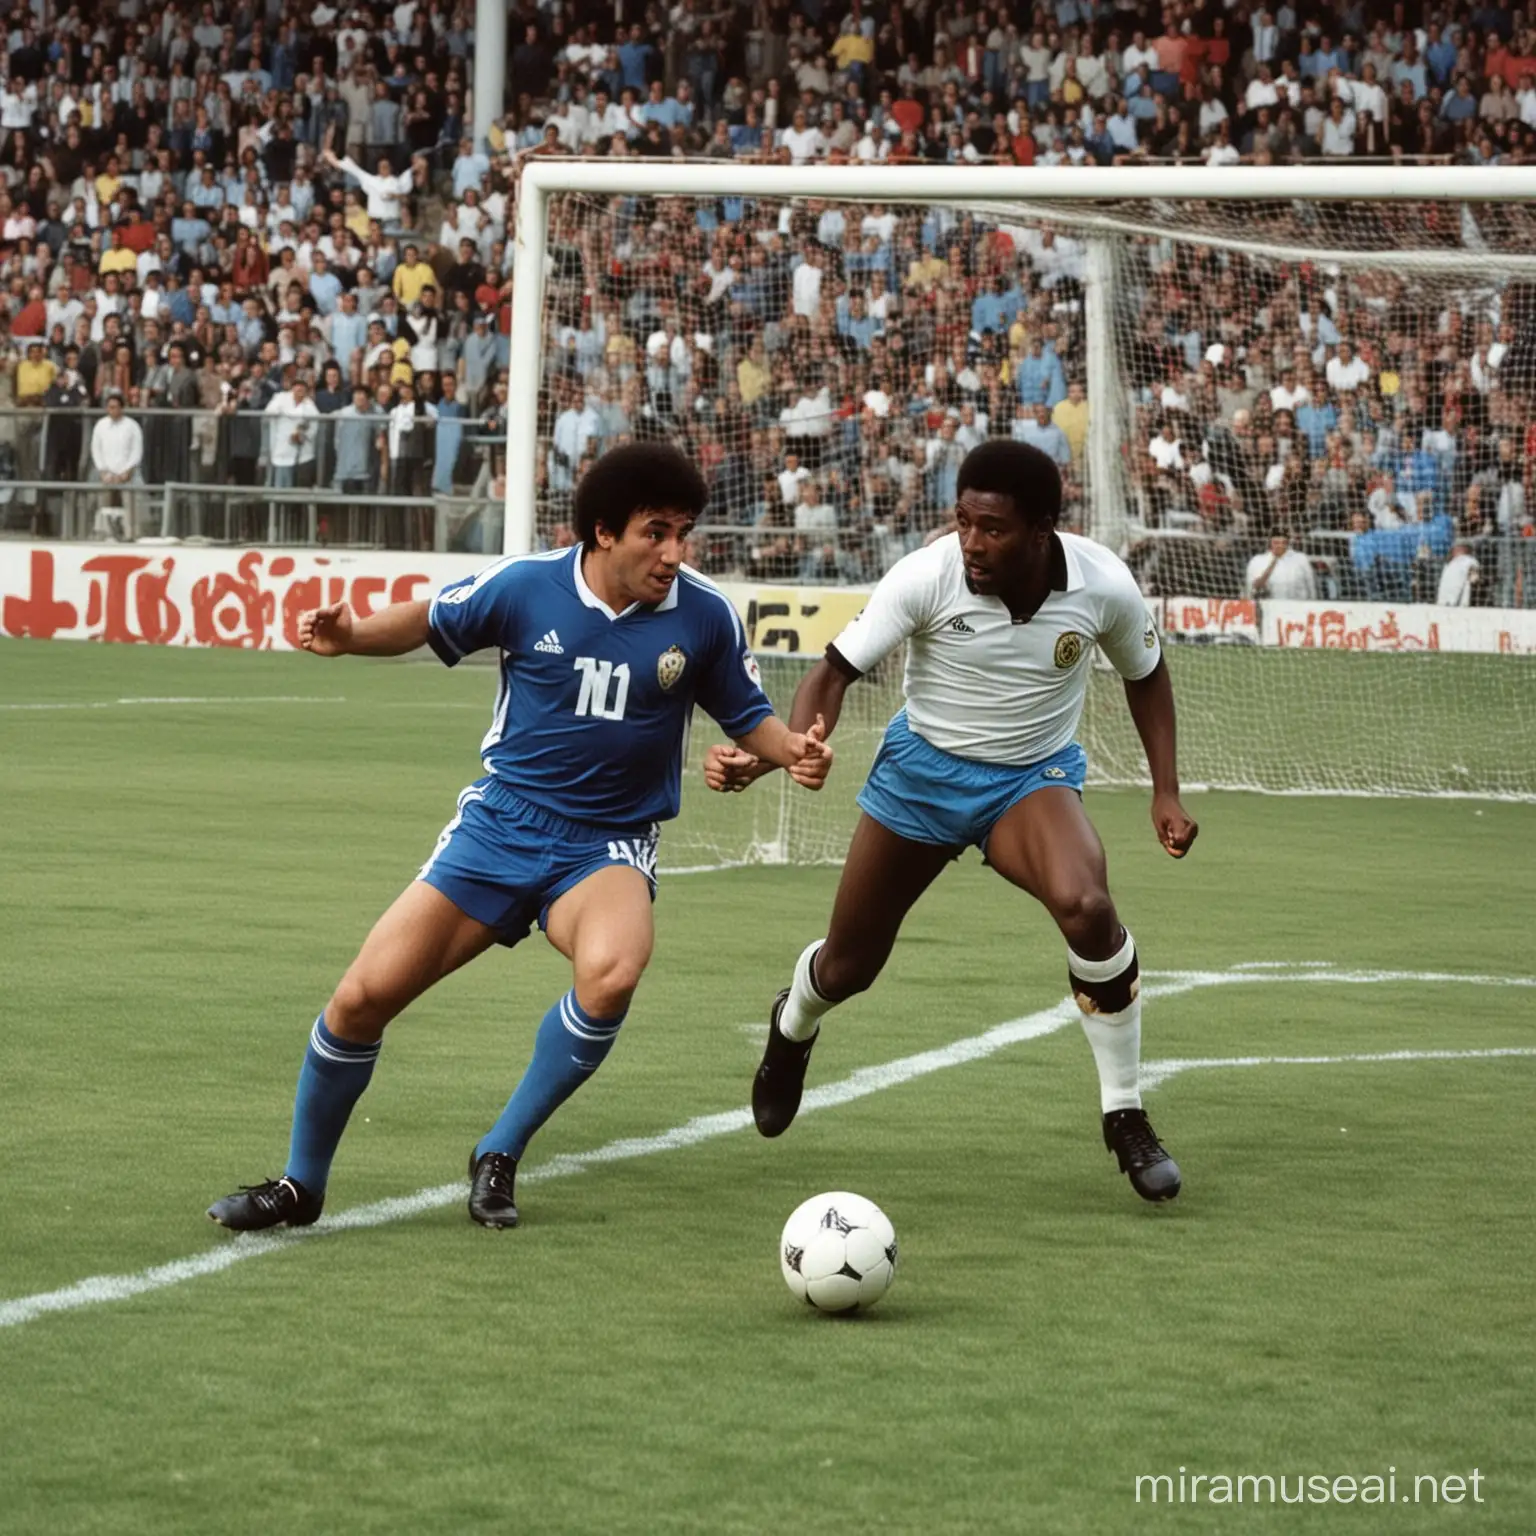 Legendary Football Rivals Maradona and Pel Heading to Their Respective Goals